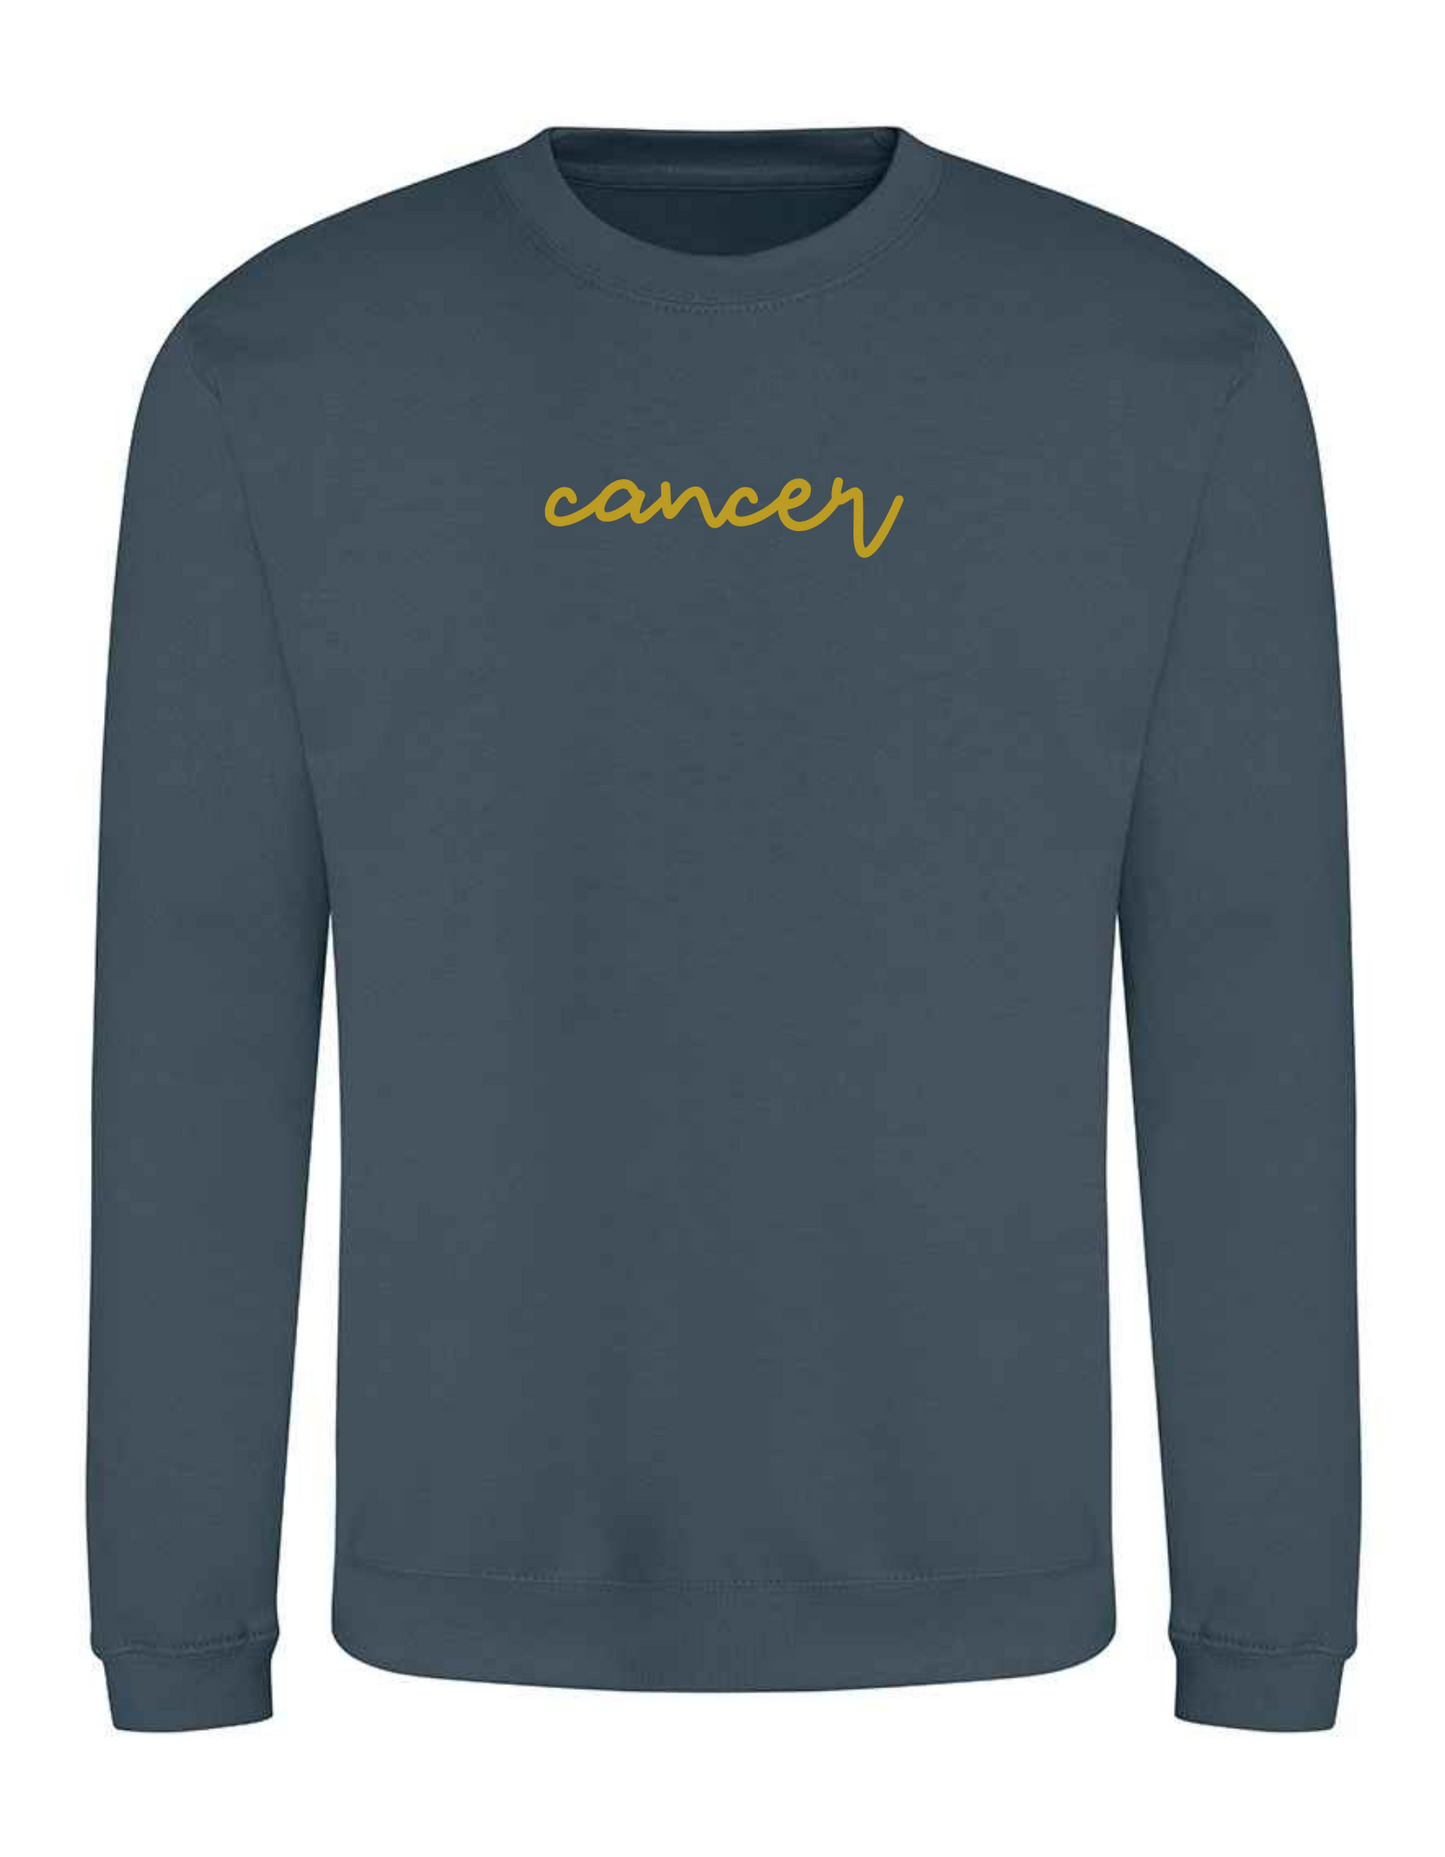 crew neck sweater with zodiac Cancer design